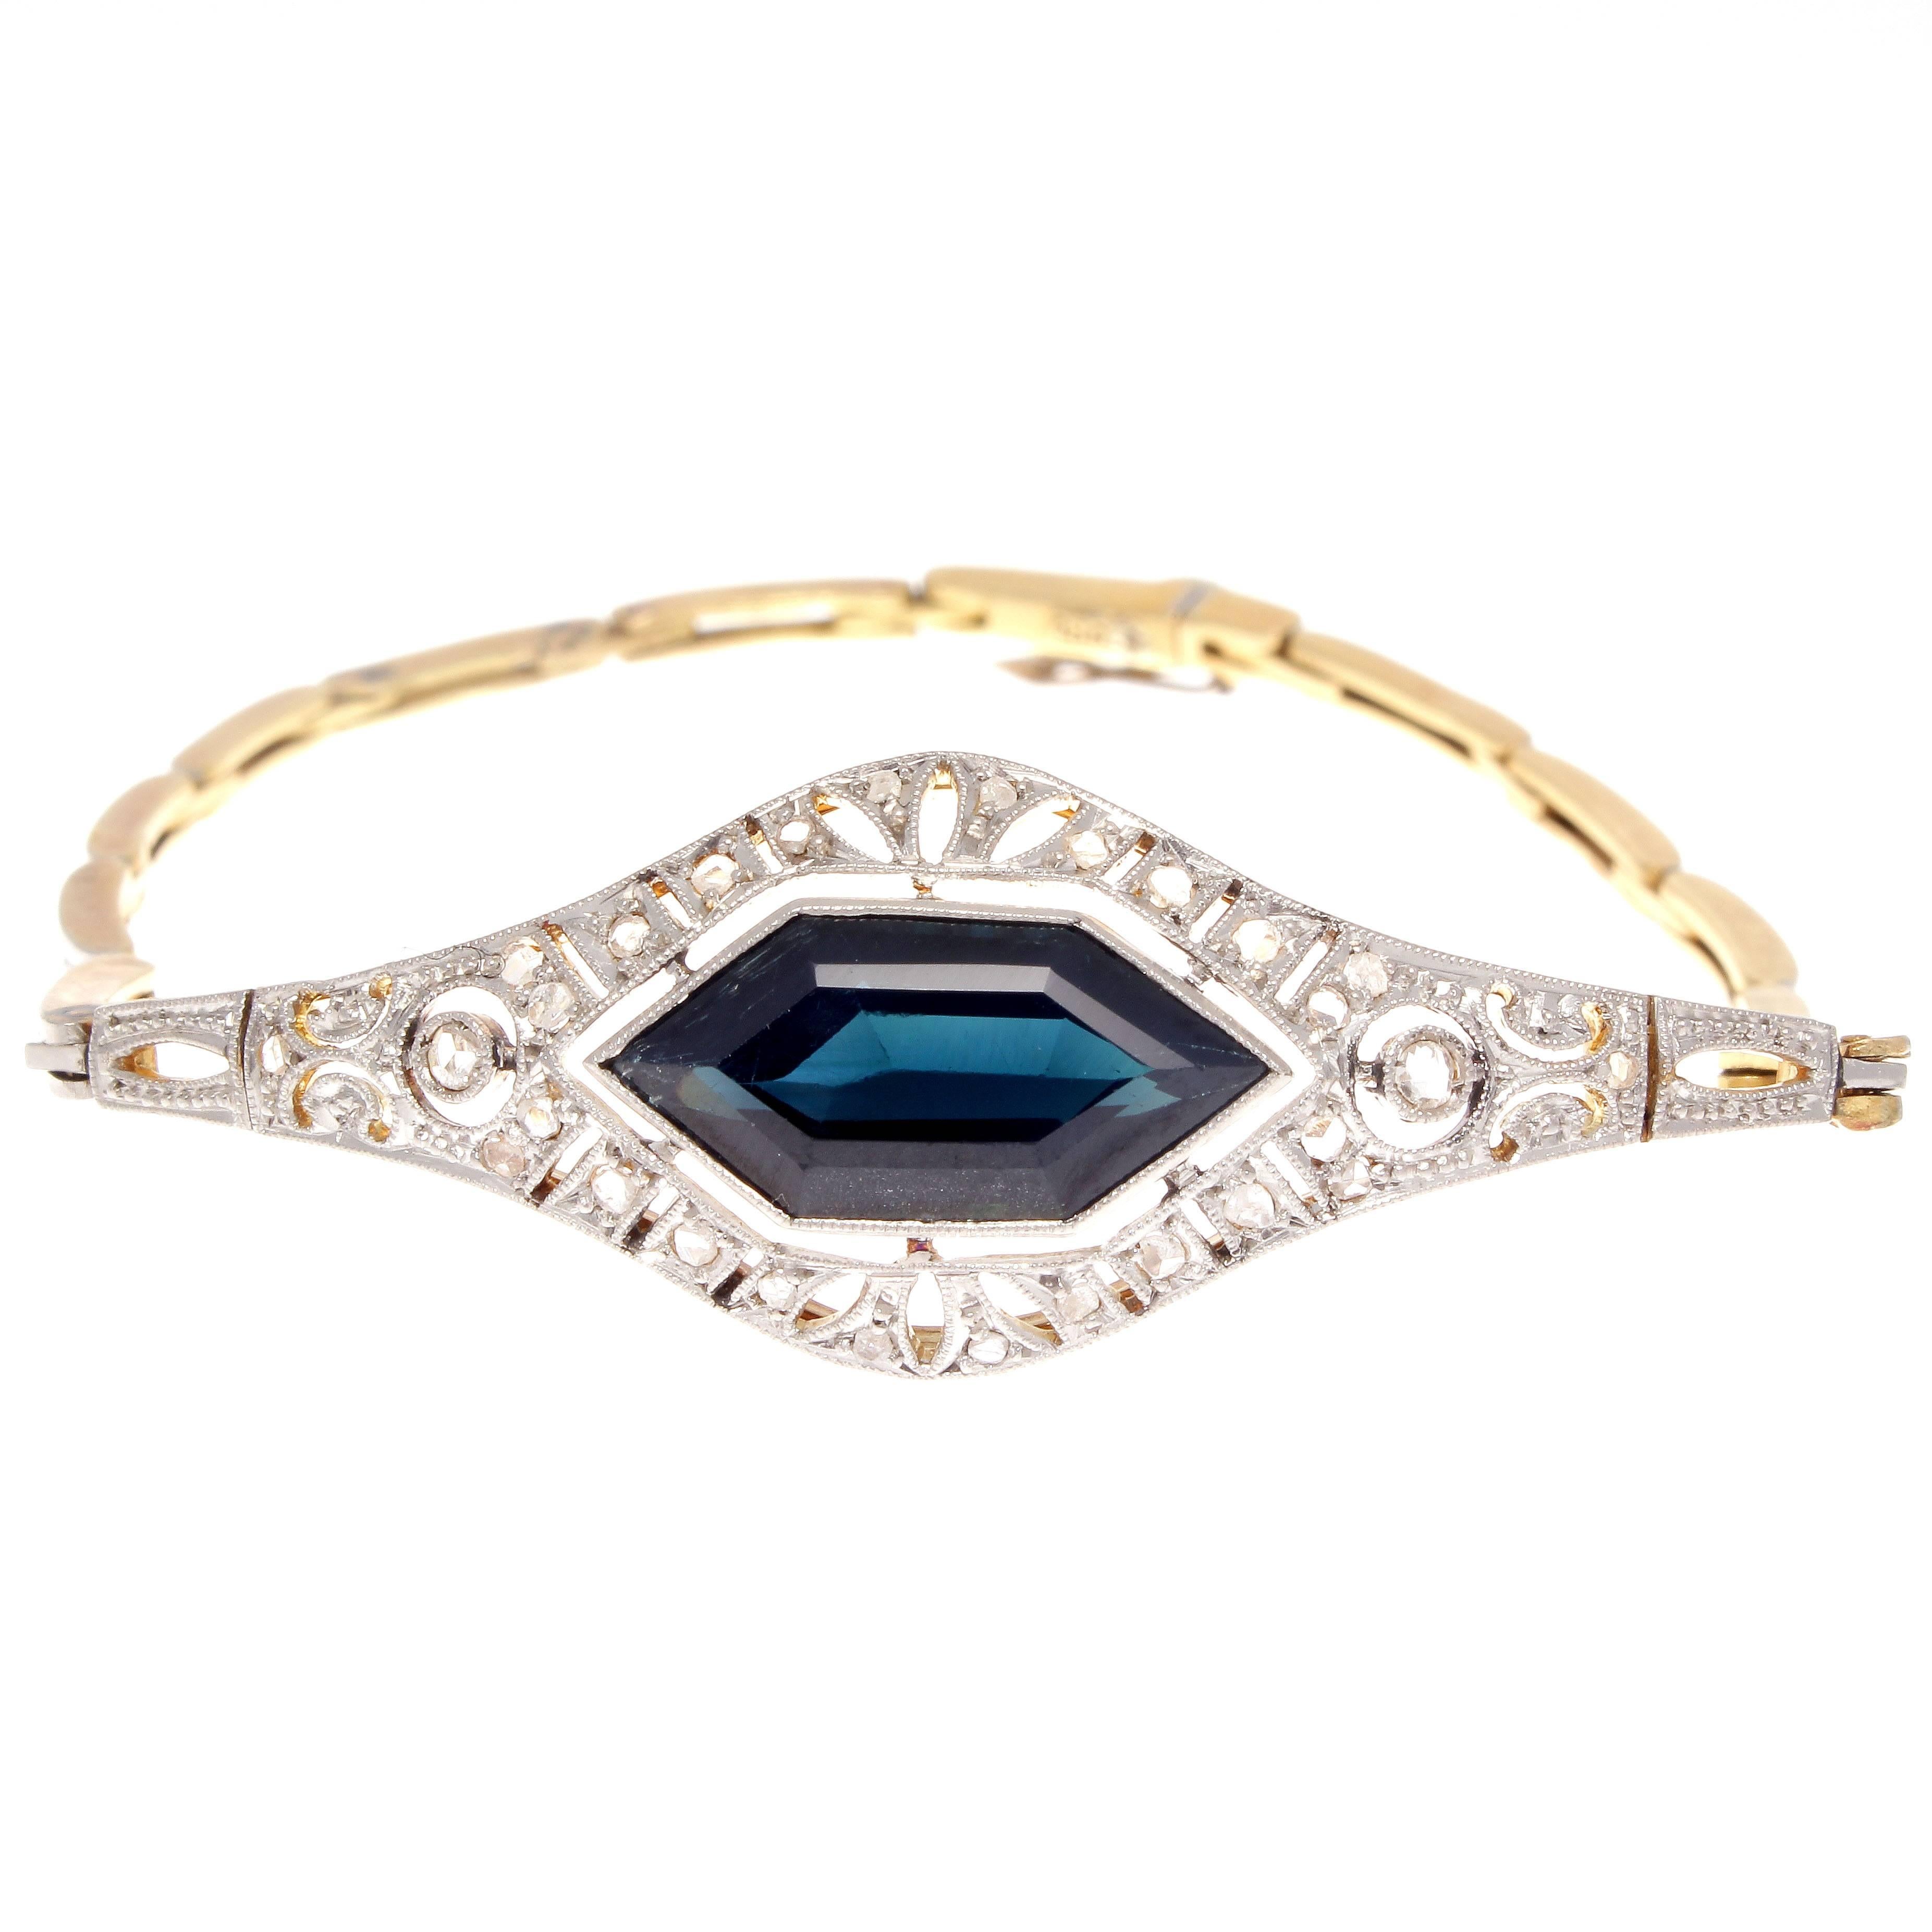 Sapphire Diamond Platinum Gold Bracelet